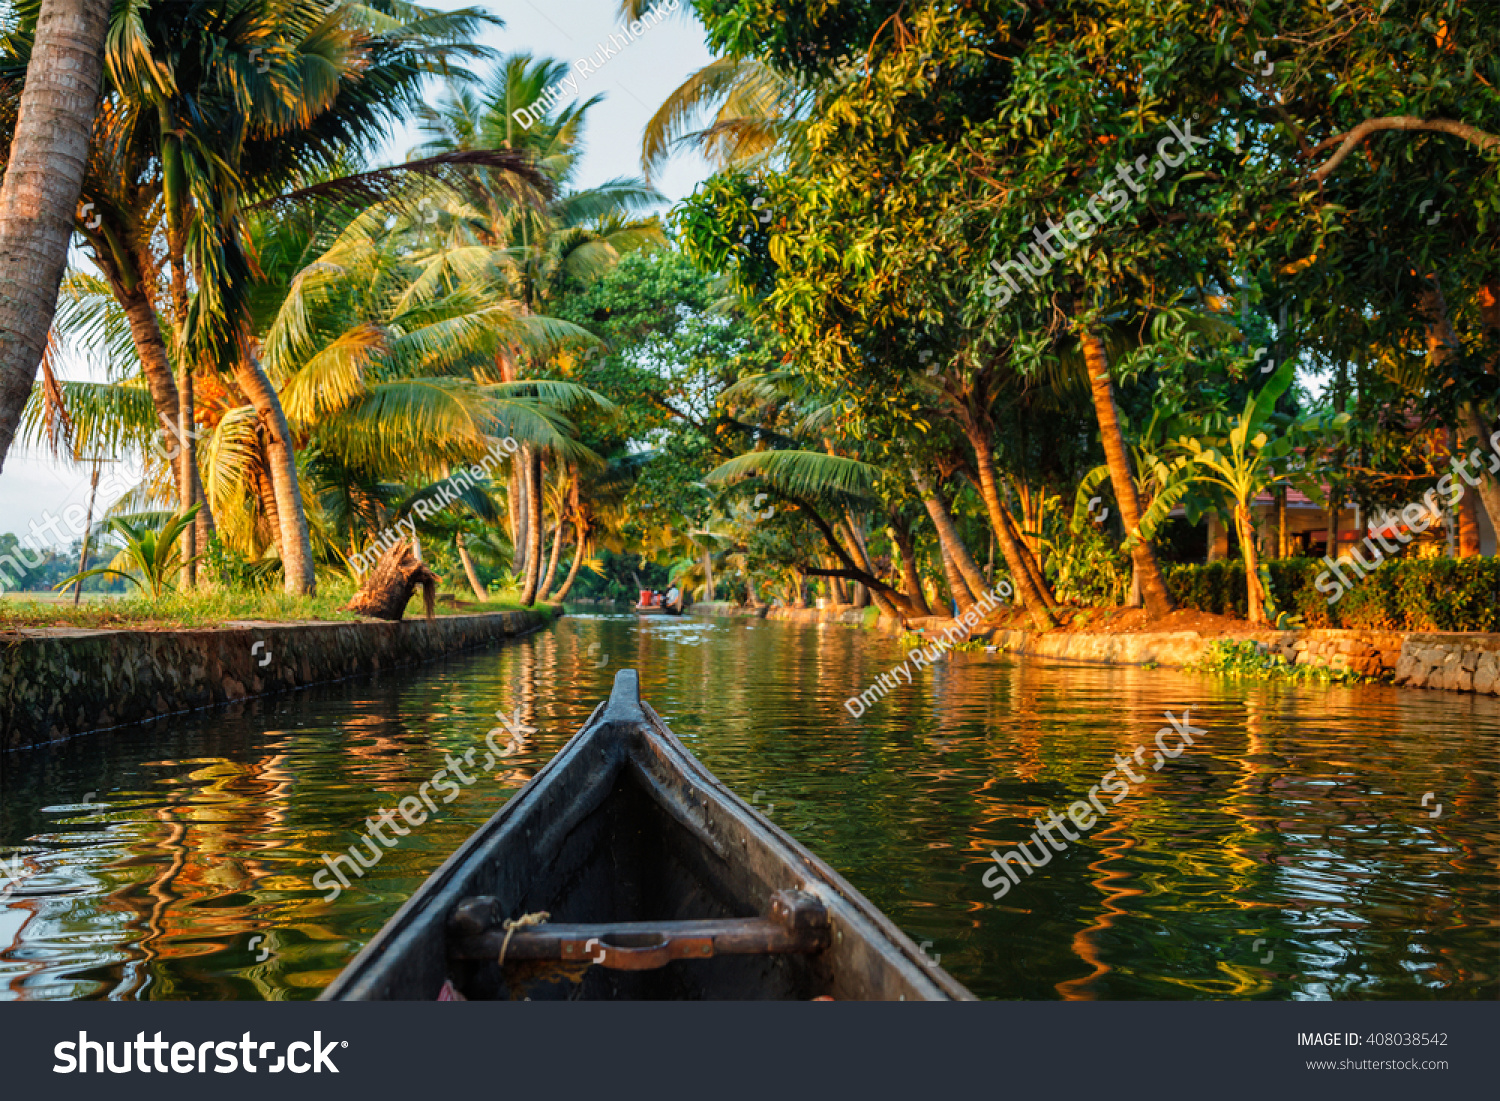 Kerala backwaters tourism travel in canoe boat. Kerala, India #408038542